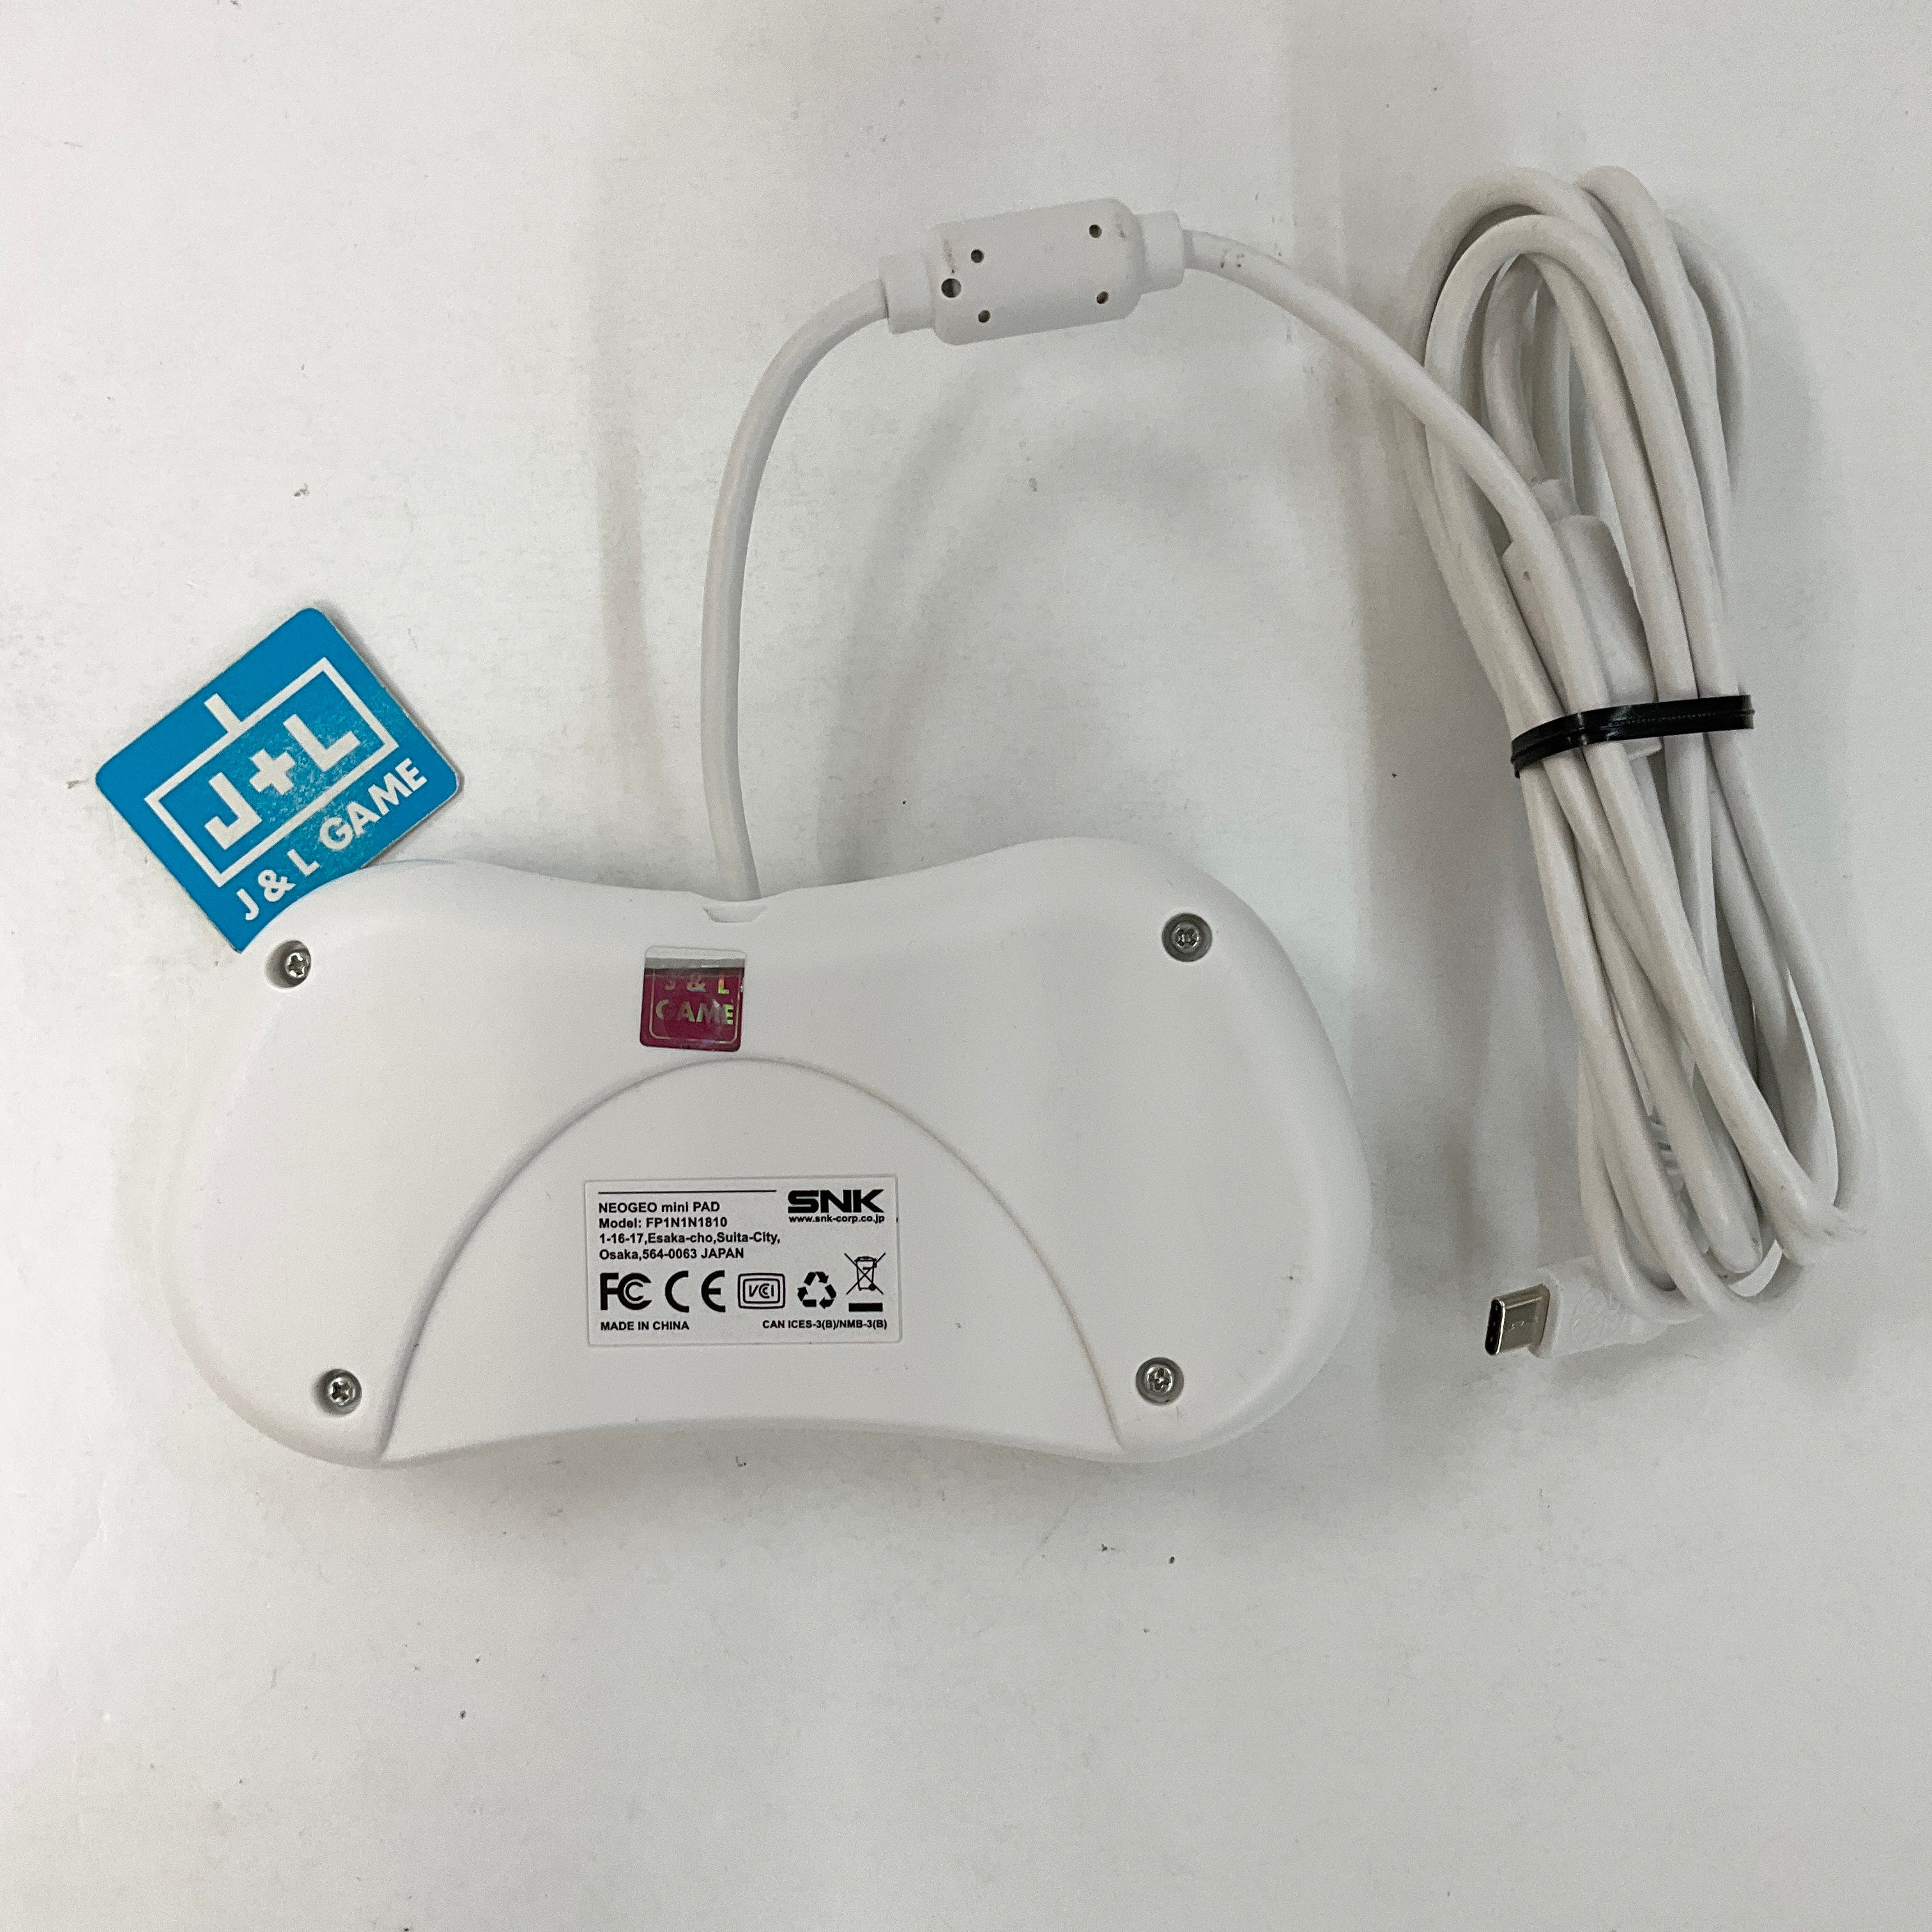 NEOGEO mini PAD (White) - (NGM) NeoGeo Mini [Pre-Owned] Accessories SNK   